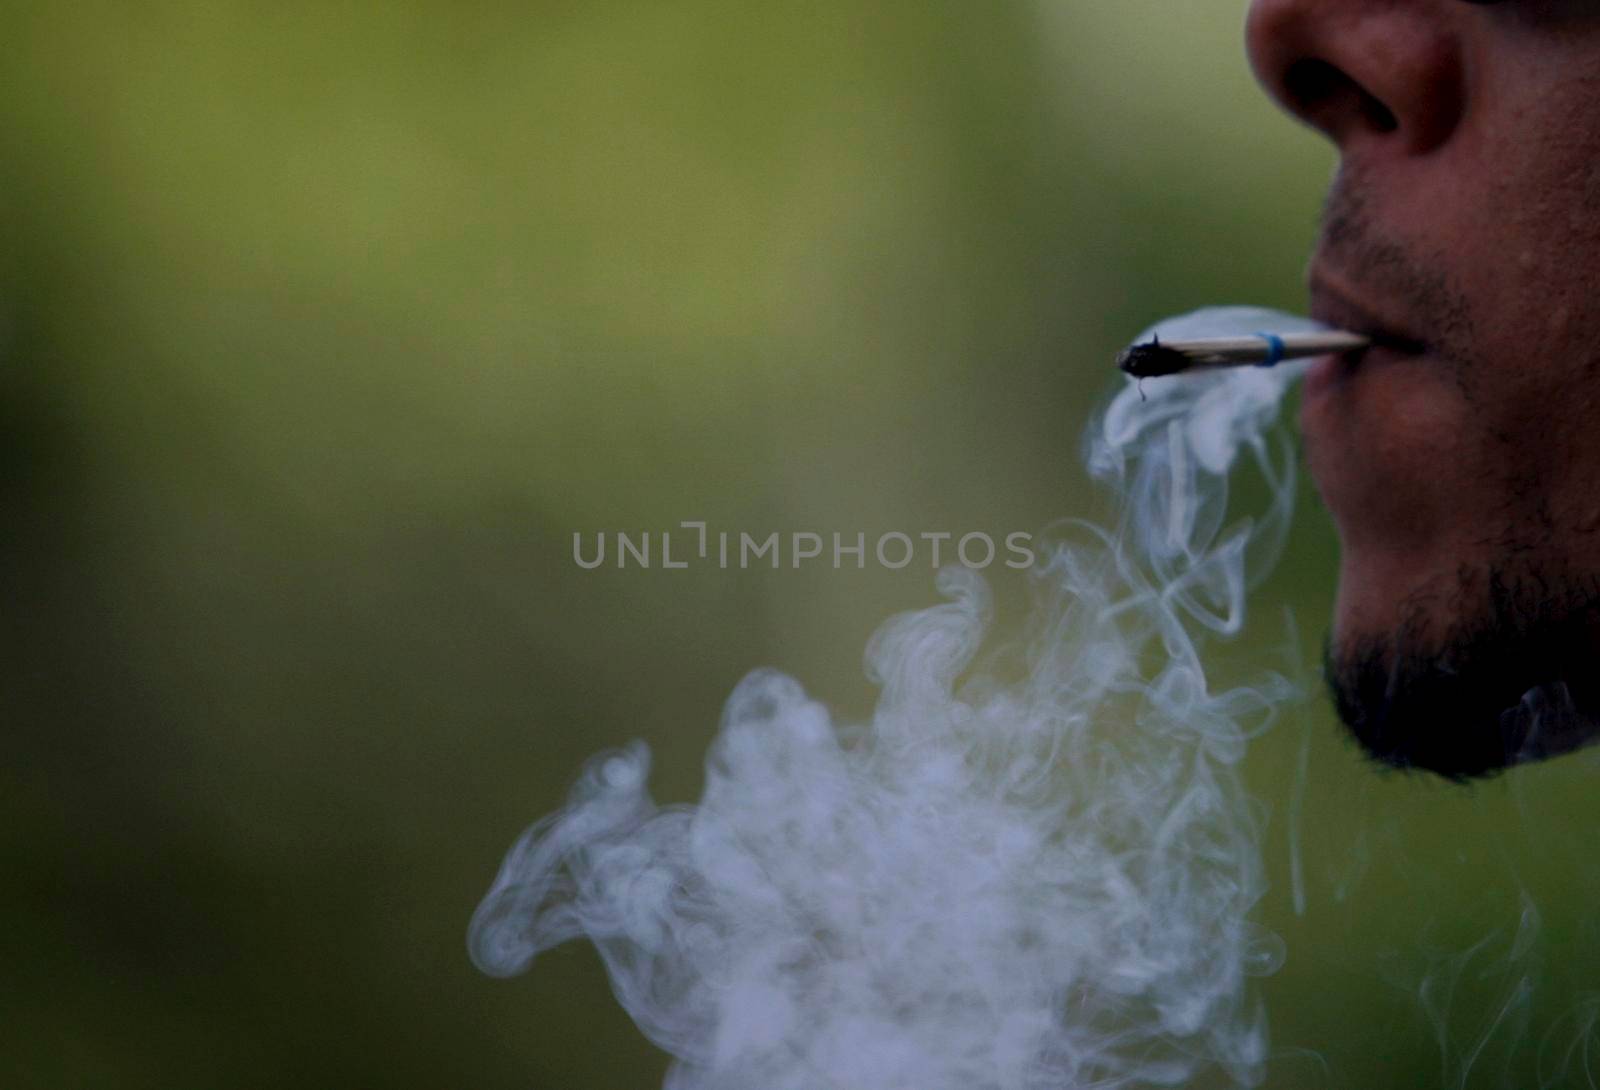 person smoking straw cigarette by joasouza